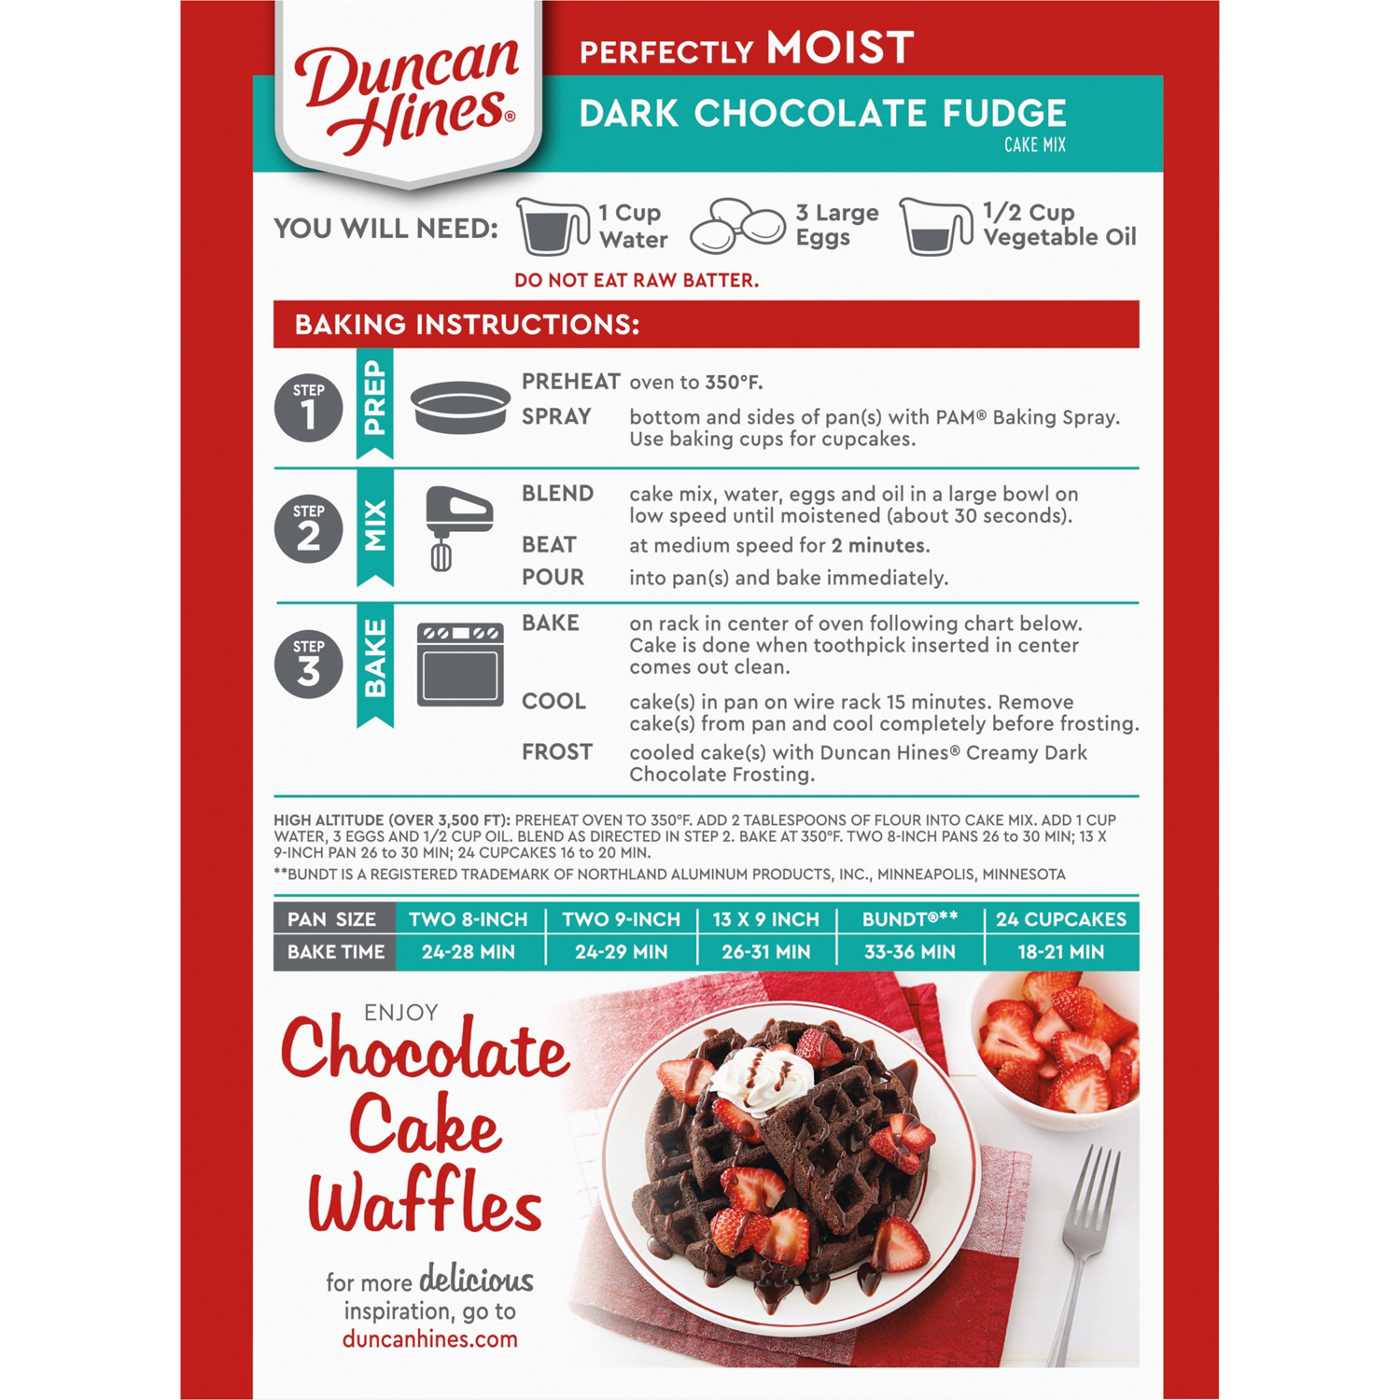 Duncan Hines Perfectly Moist Dark Chocolate Fudge Cake Mix; image 7 of 7